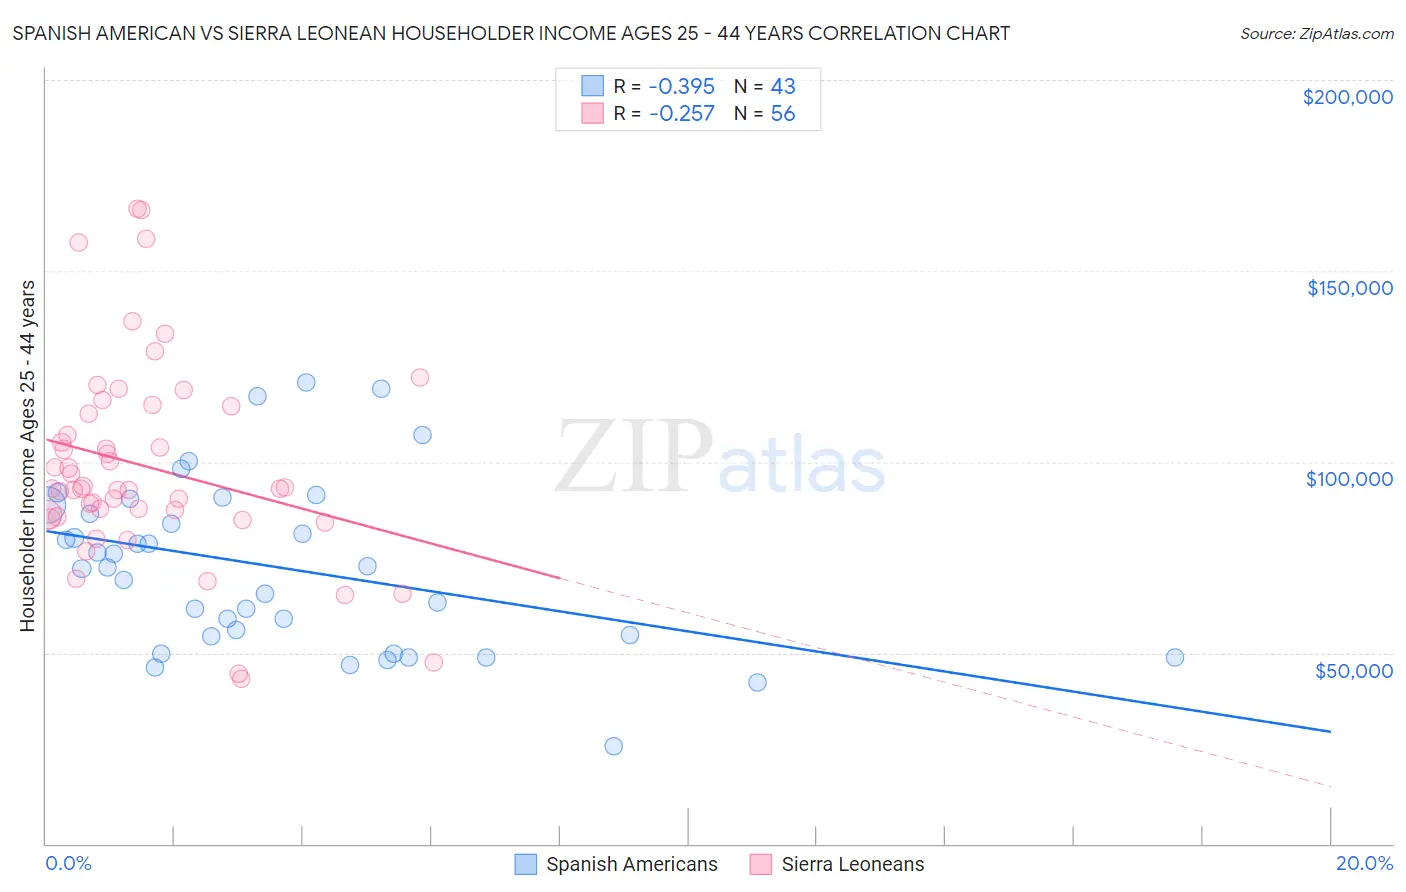 Spanish American vs Sierra Leonean Householder Income Ages 25 - 44 years